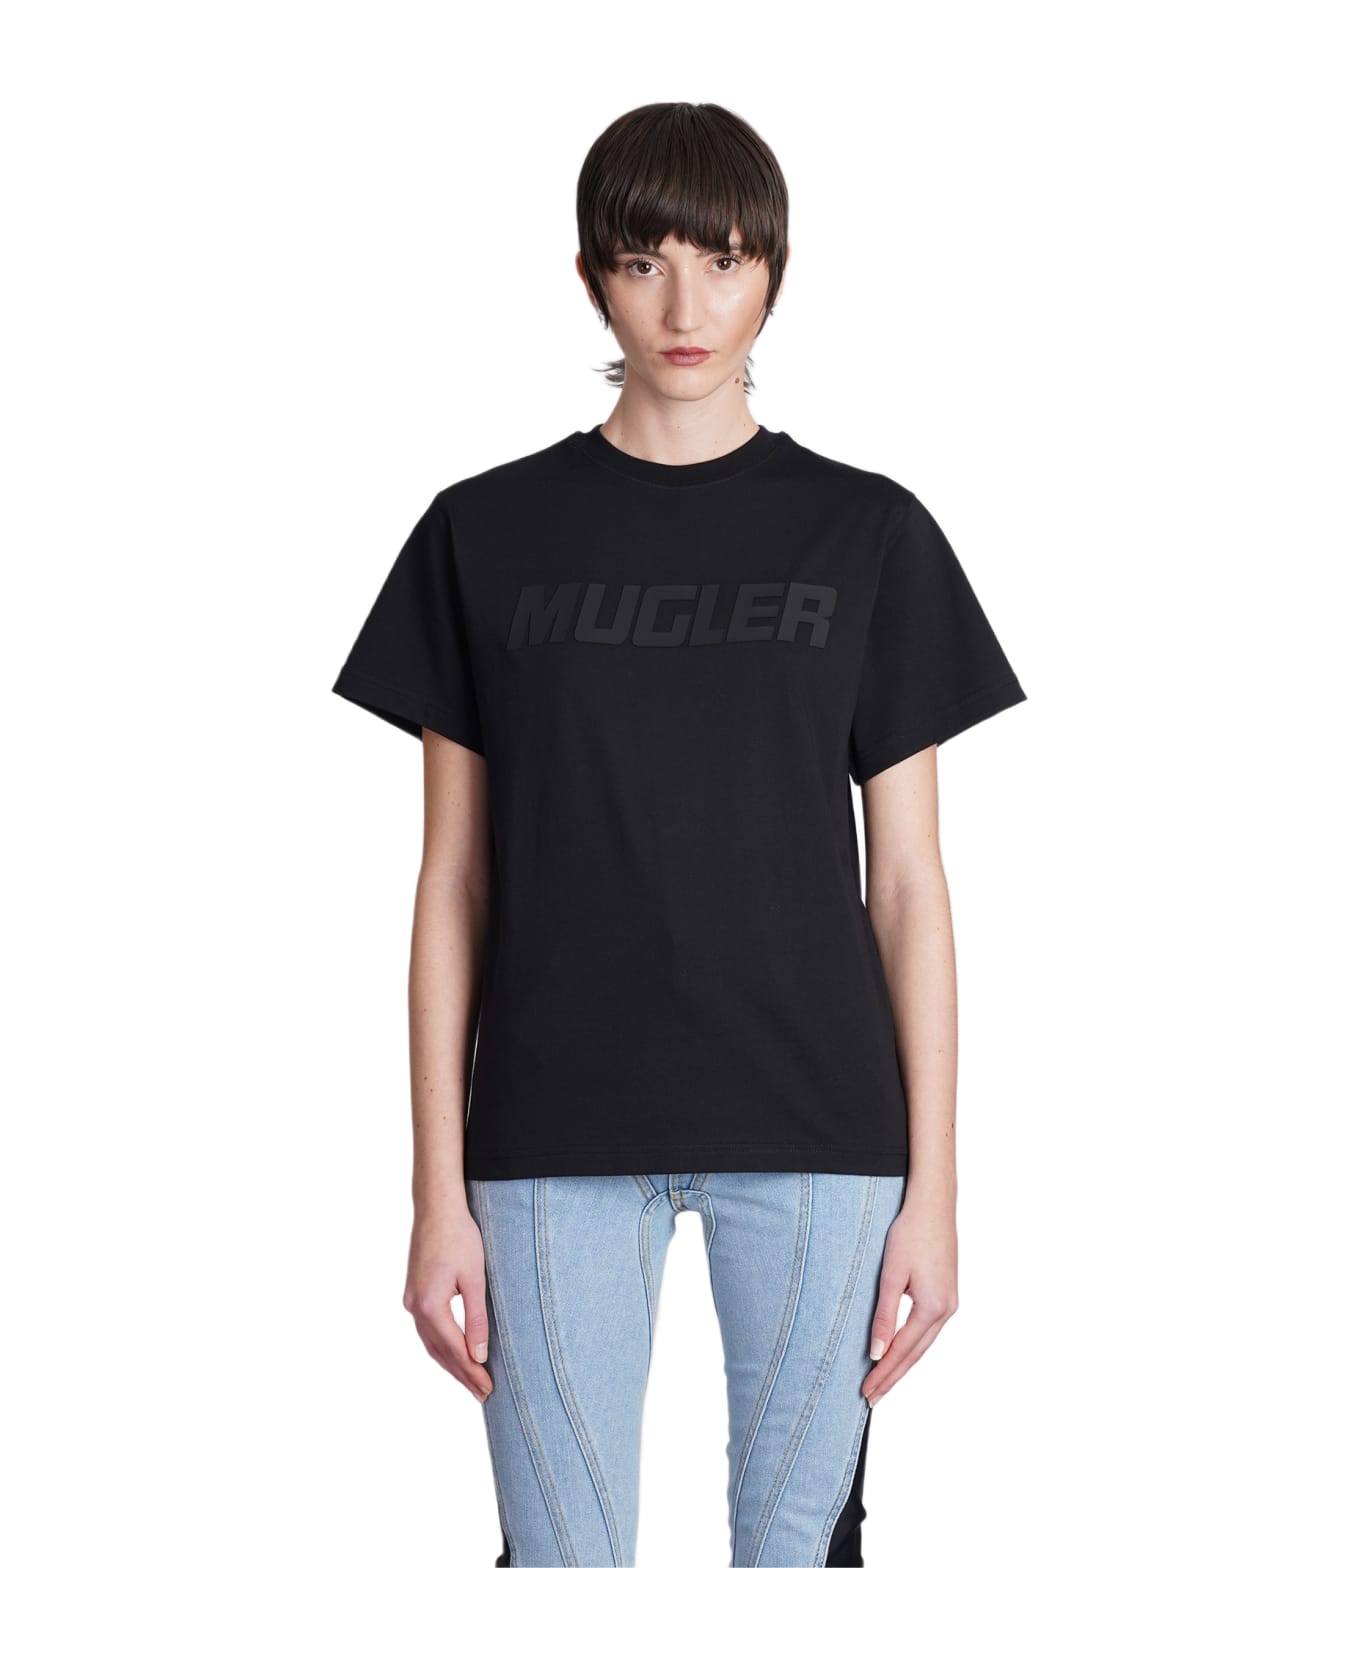 Mugler T-shirt In Black Cotton - black